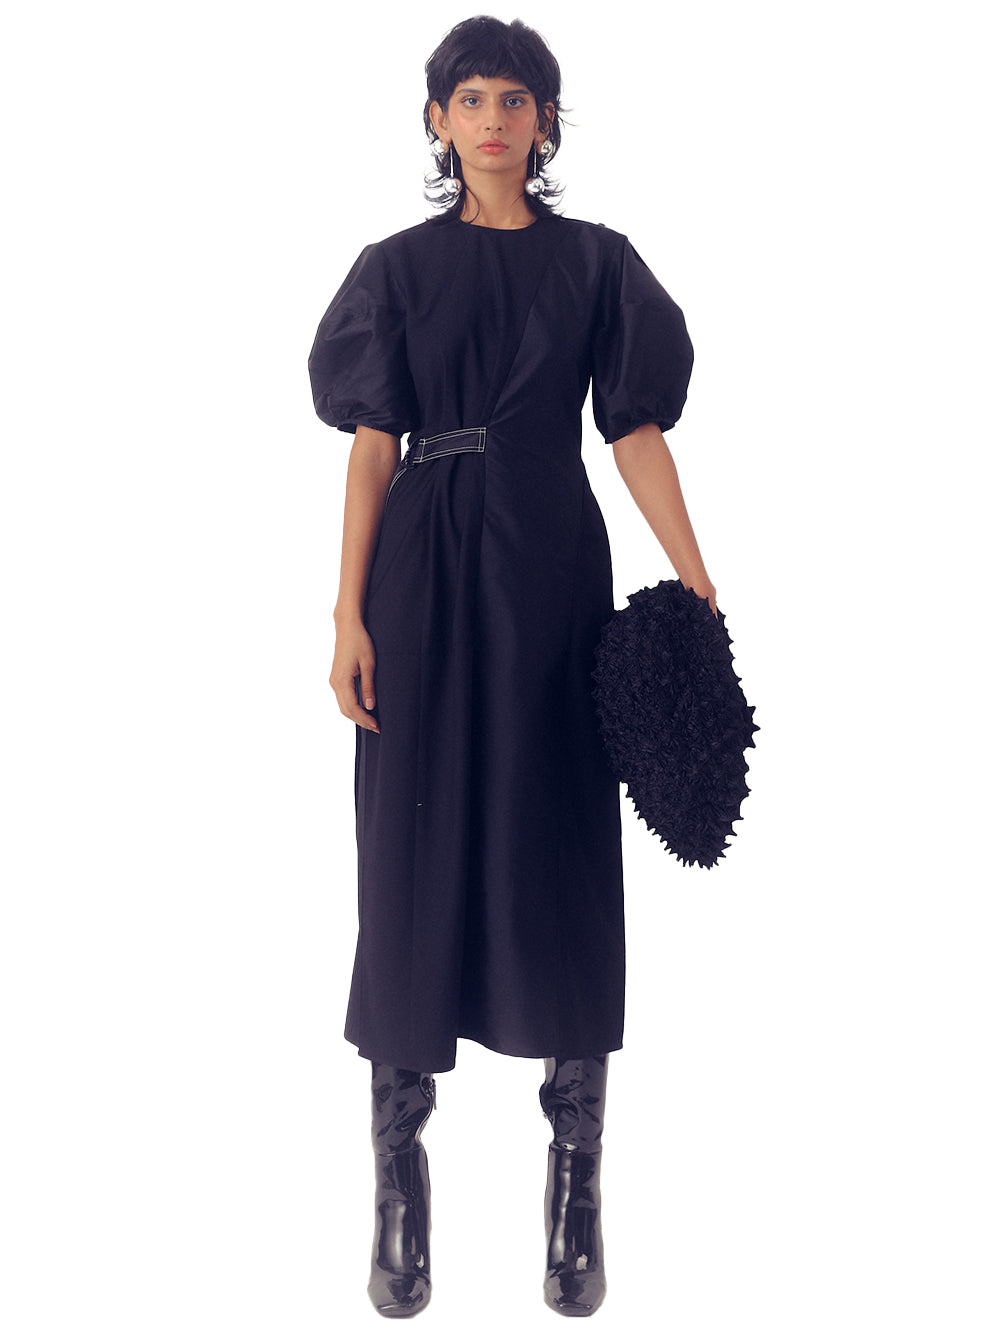 The Strokes Midi Dress (Black)